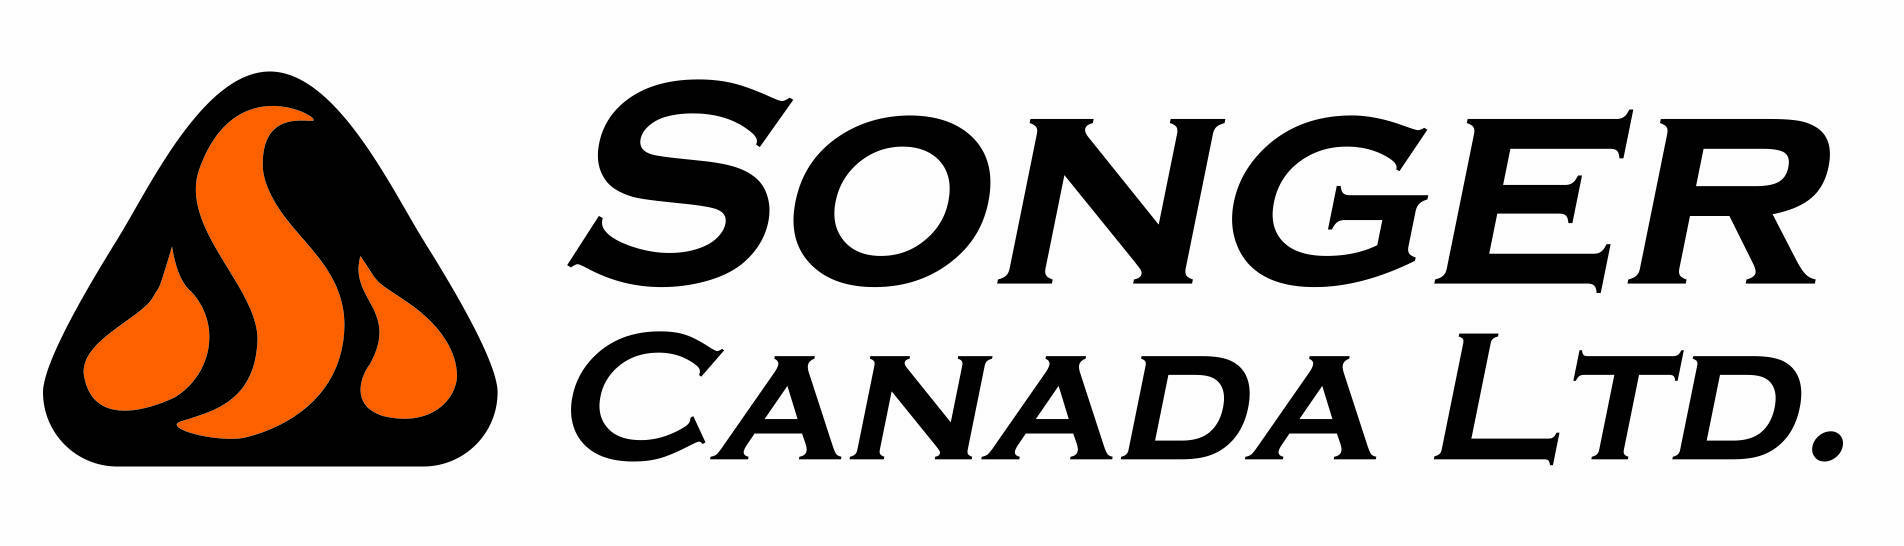 Songer Canada Ltd